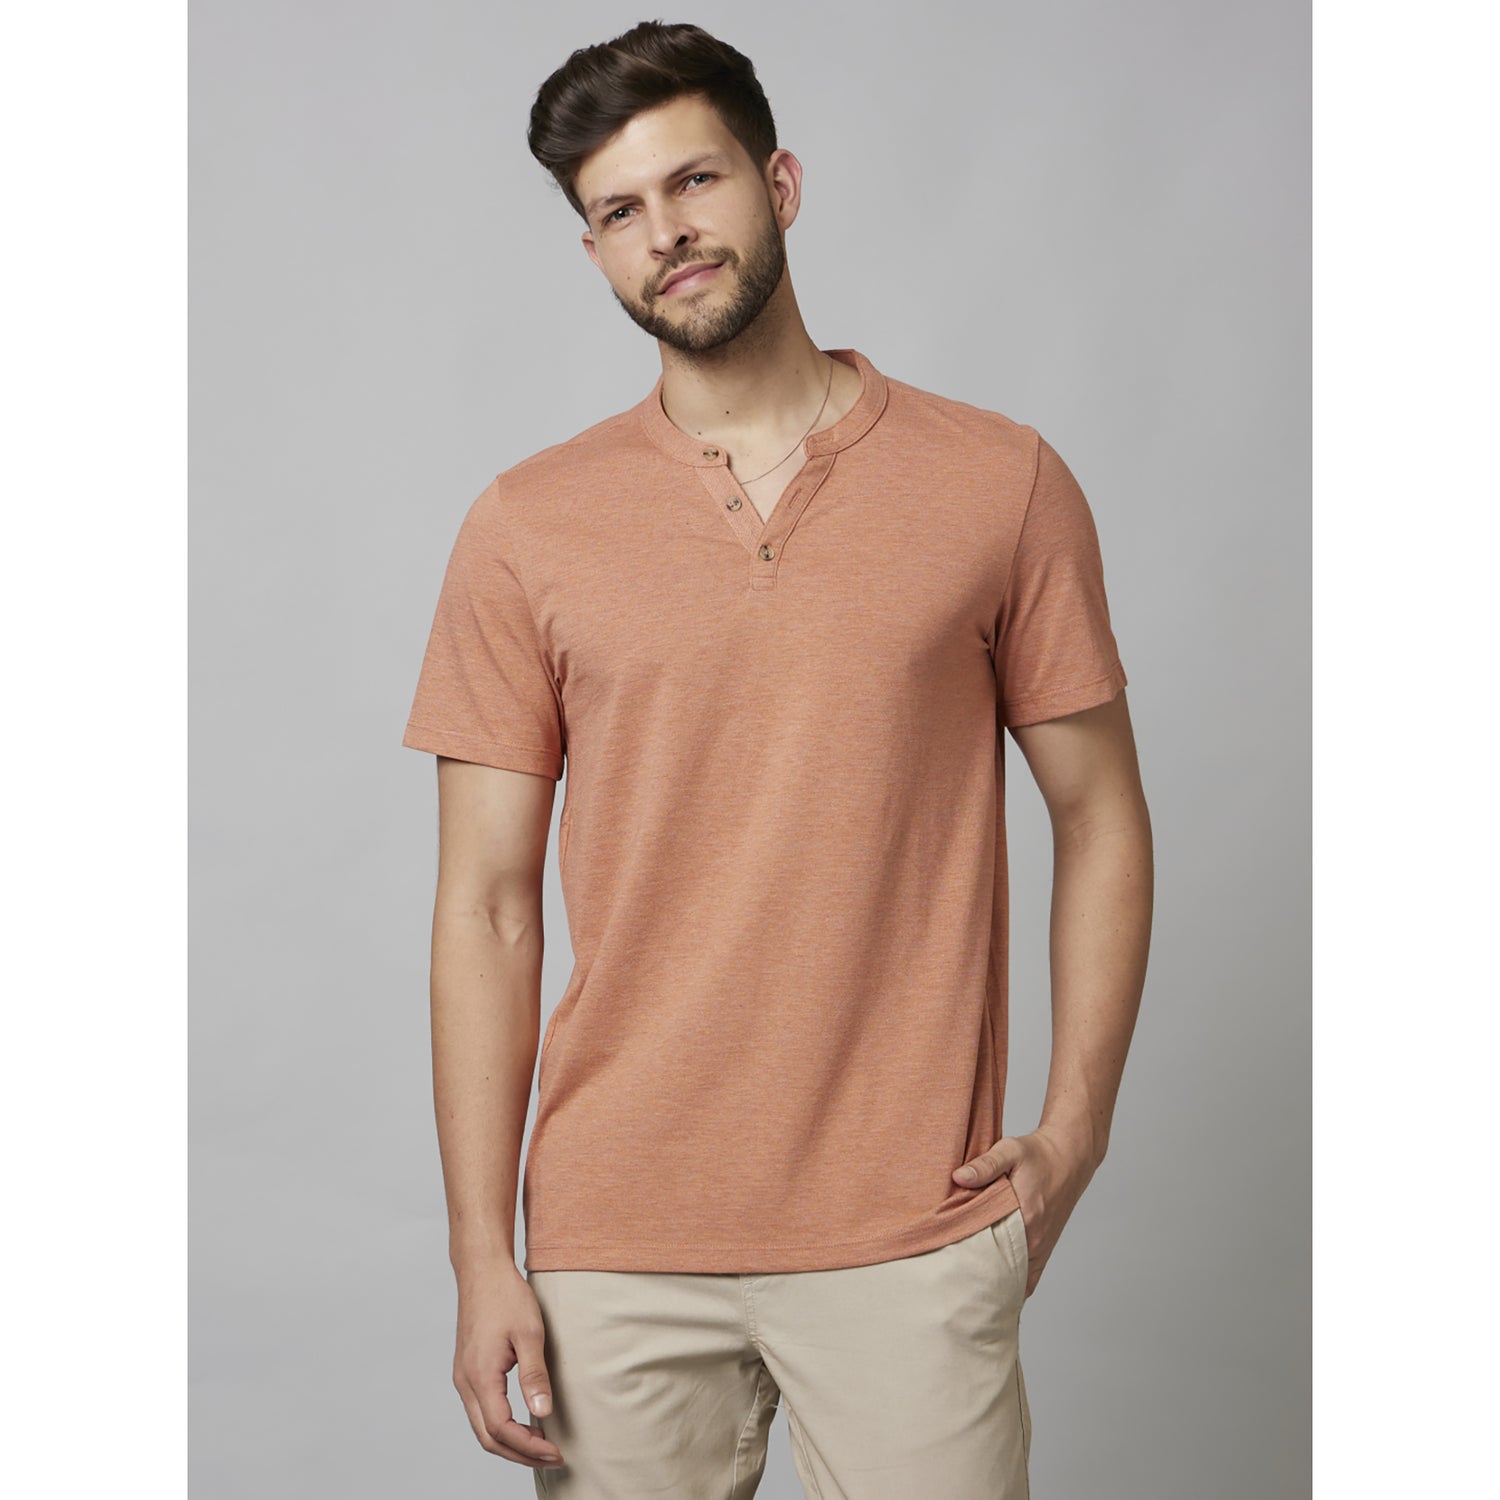 Peach Solid Short Sleeve Cotton Blend T-Shirts (CEGETI1)